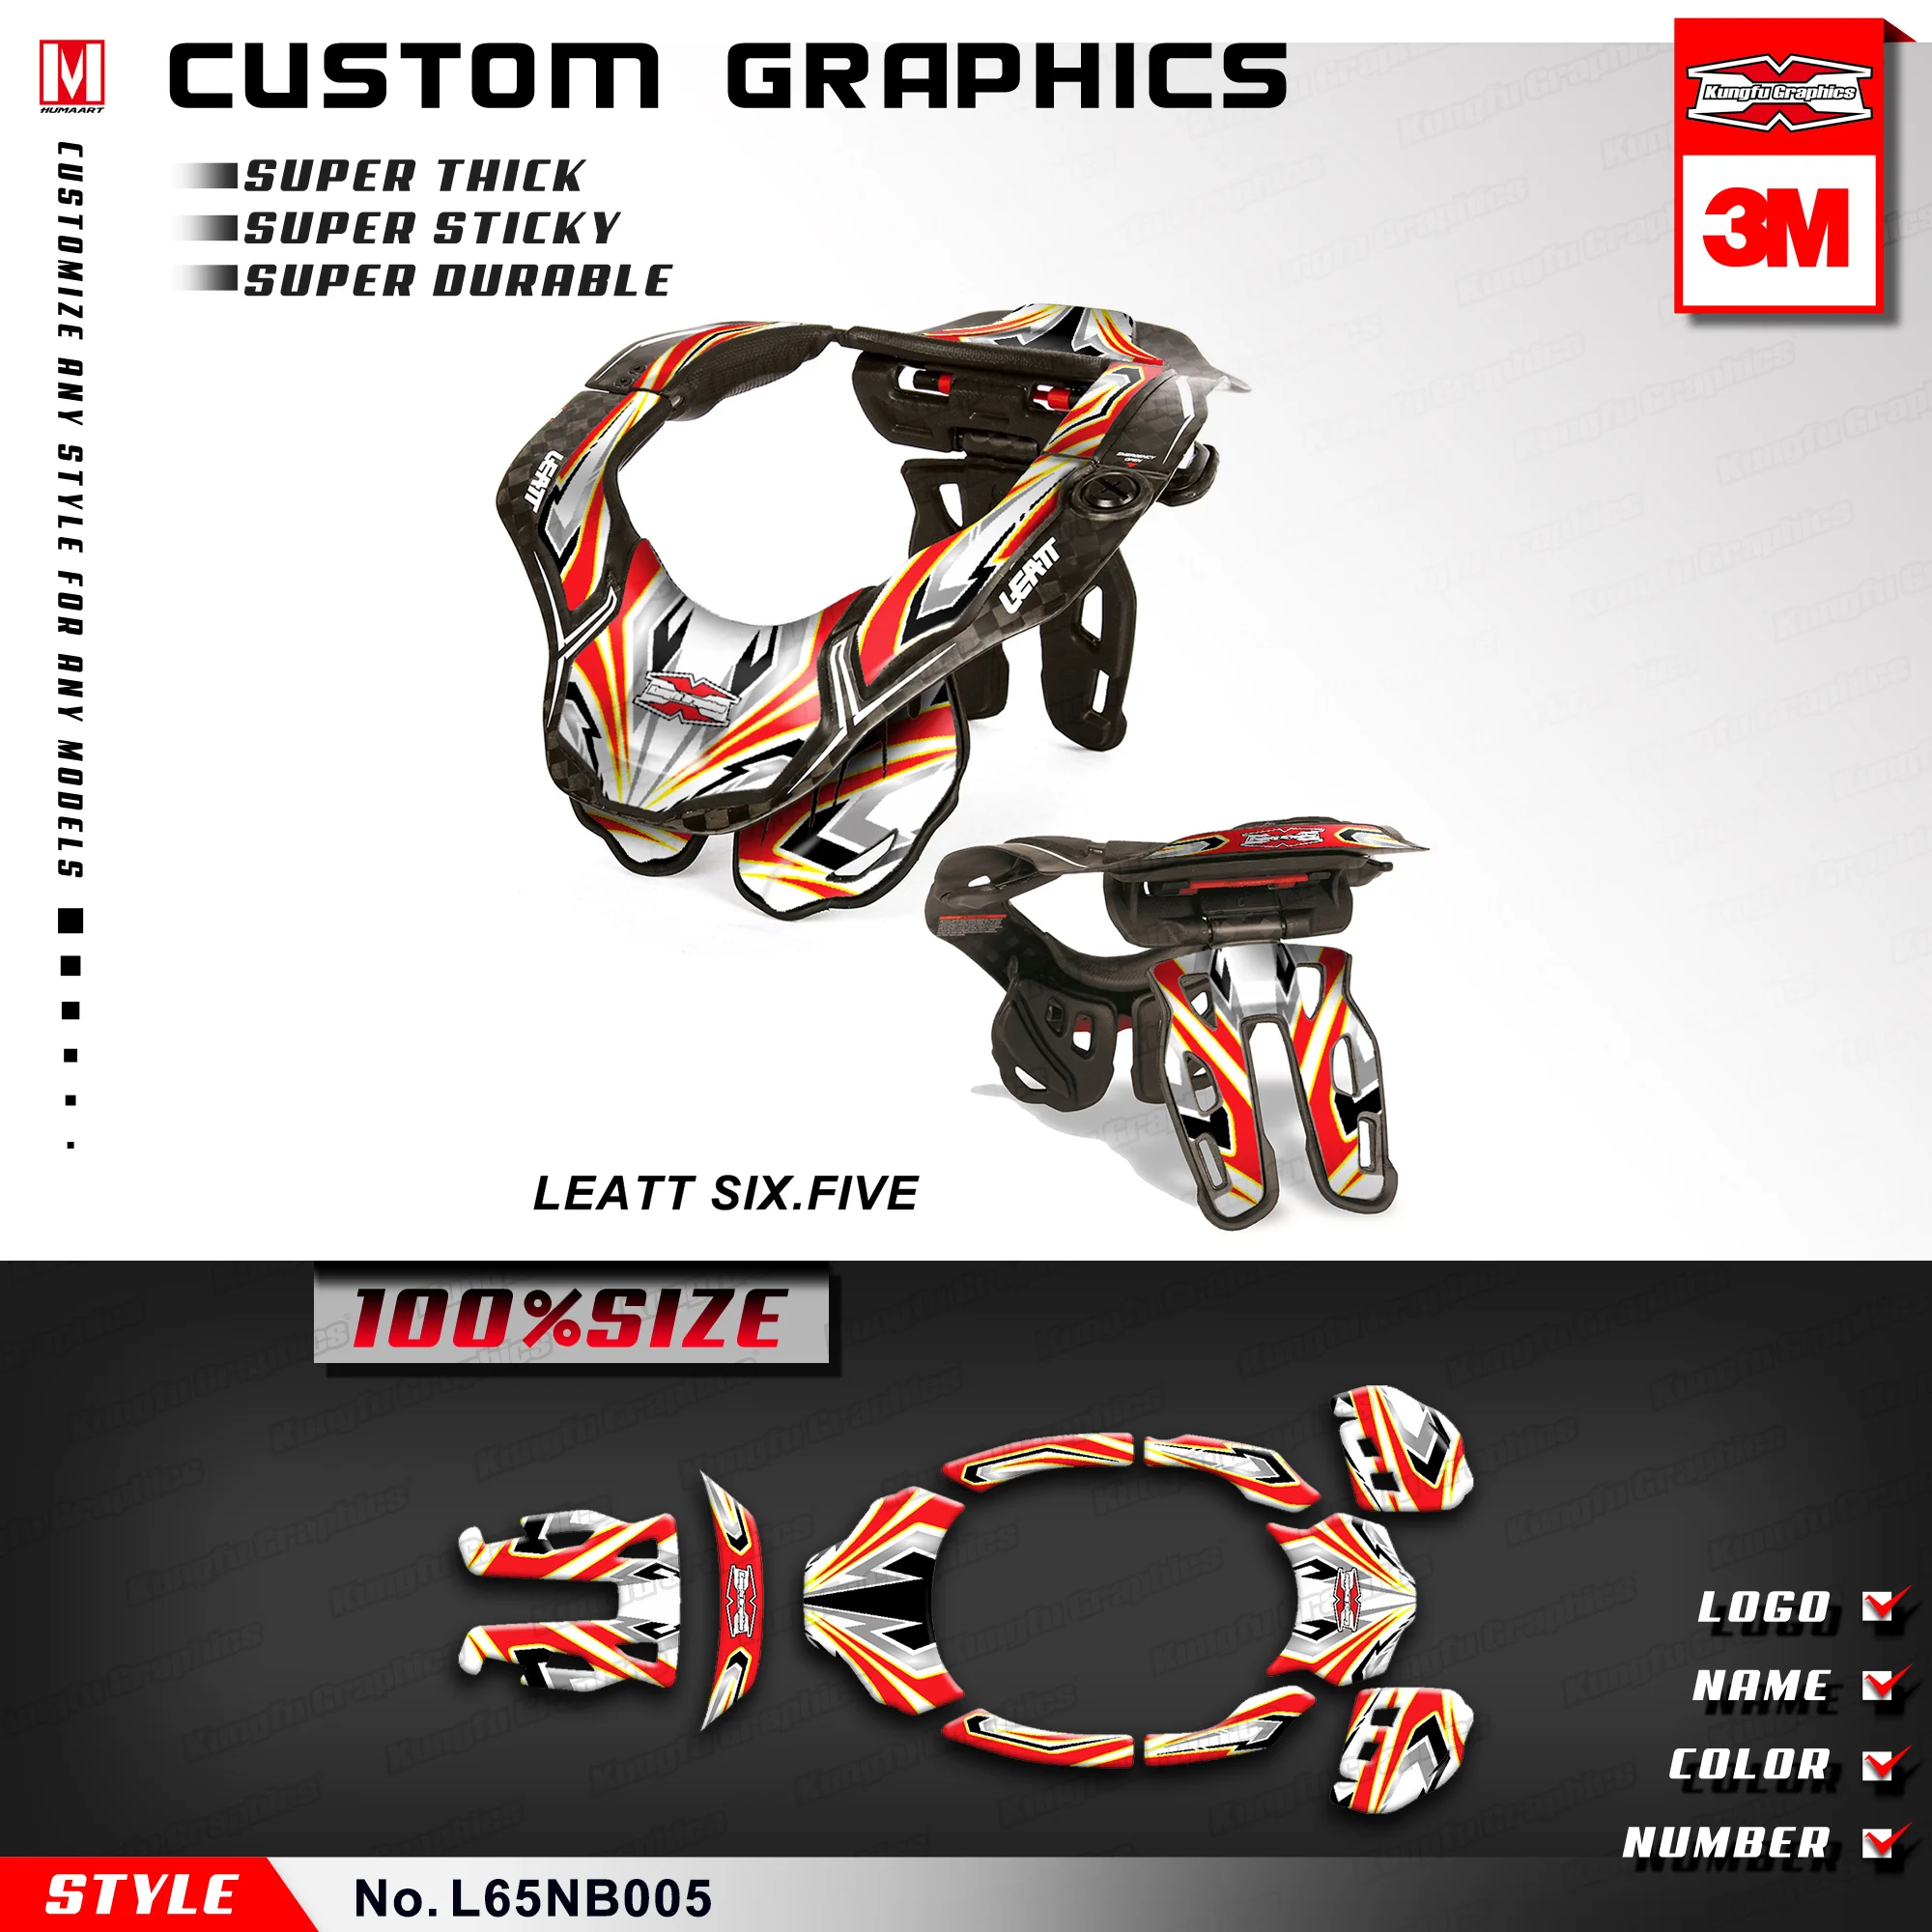 

KUNGFU GRAPHICS MX Decals Motocross Stickers for Leatt DBX GPX 6.5 Six Five Neck Brace Decor S/M L/XL (Style no. L65NB005)